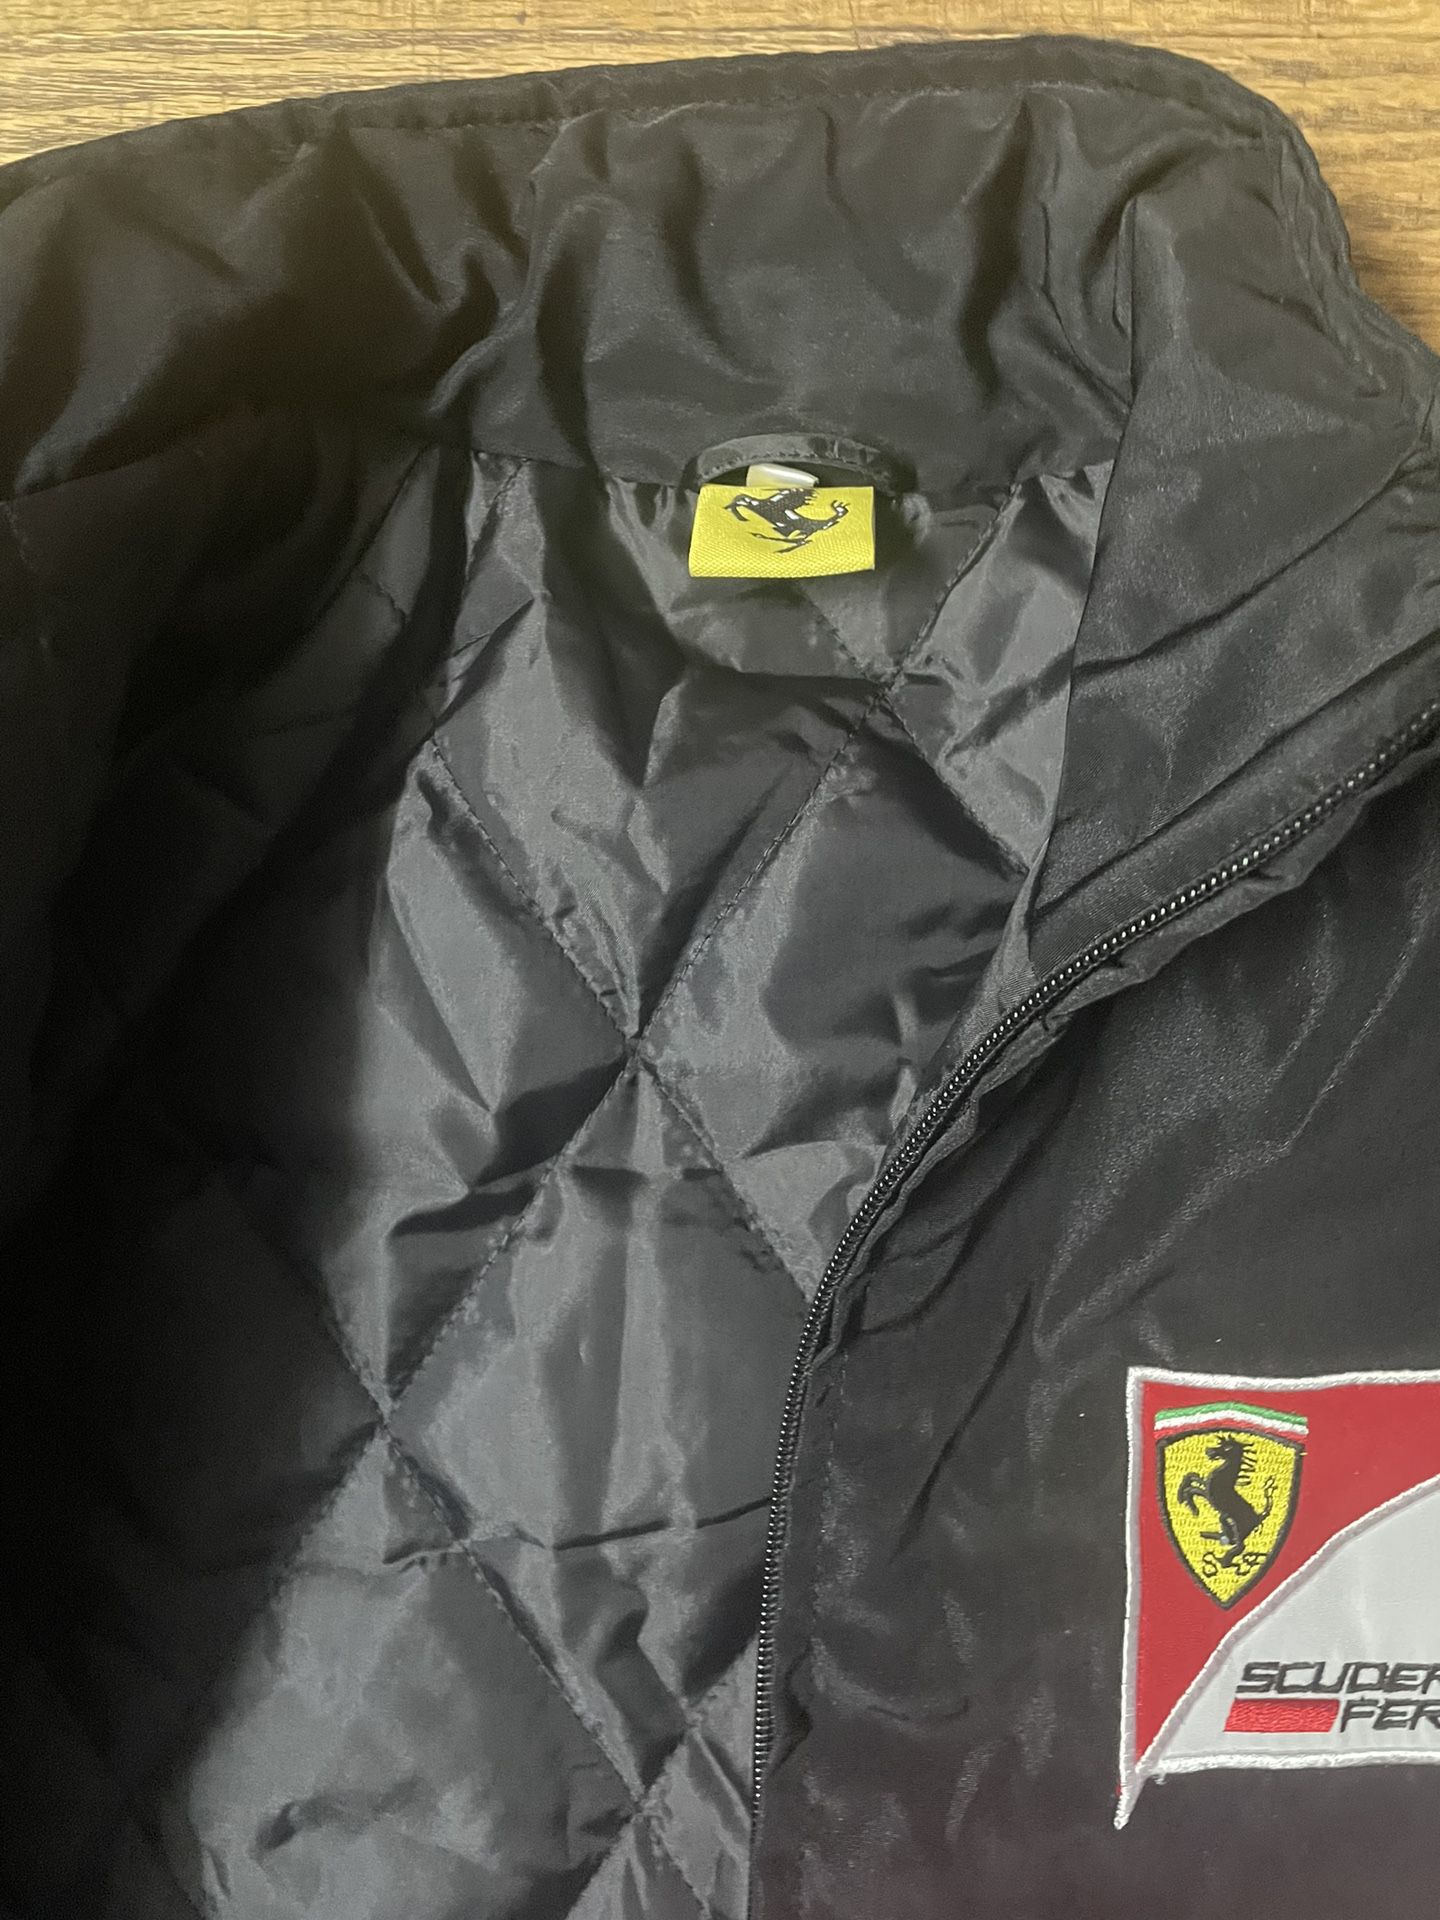 Ferrari F1 Vintage Racing Jacket for Sale in Metuchen, NJ - OfferUp